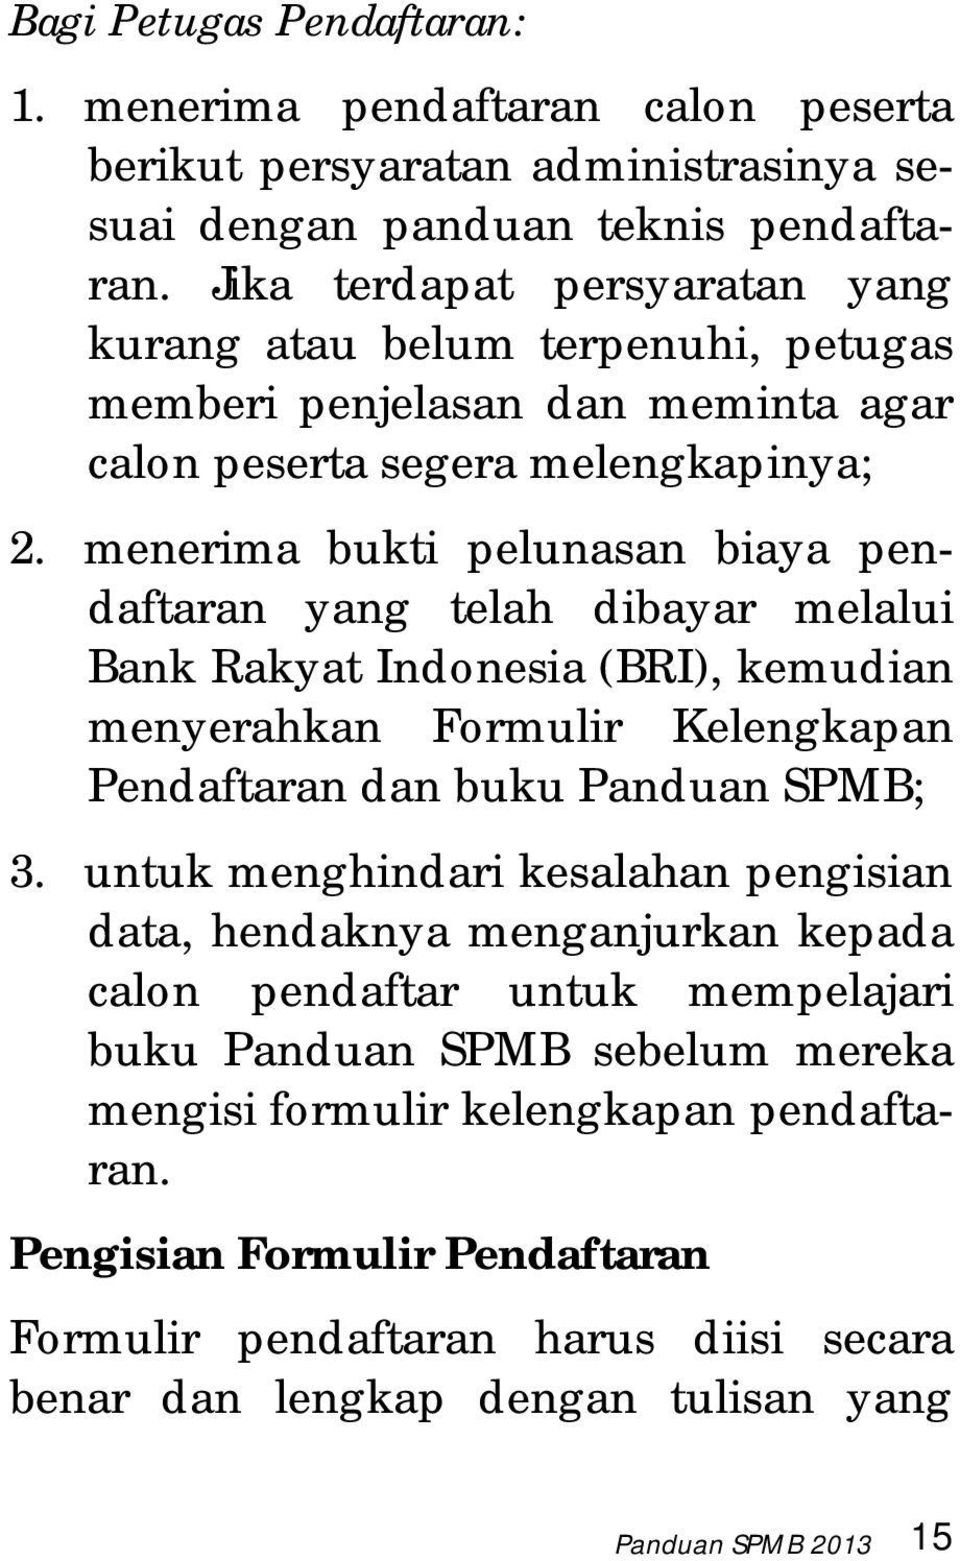 menerima bukti pelunasan biaya pendaftaran yang telah dibayar melalui Bank Rakyat Indonesia (BRI), kemudian menyerahkan Formulir Kelengkapan Pendaftaran dan buku Panduan SPMB; 3.